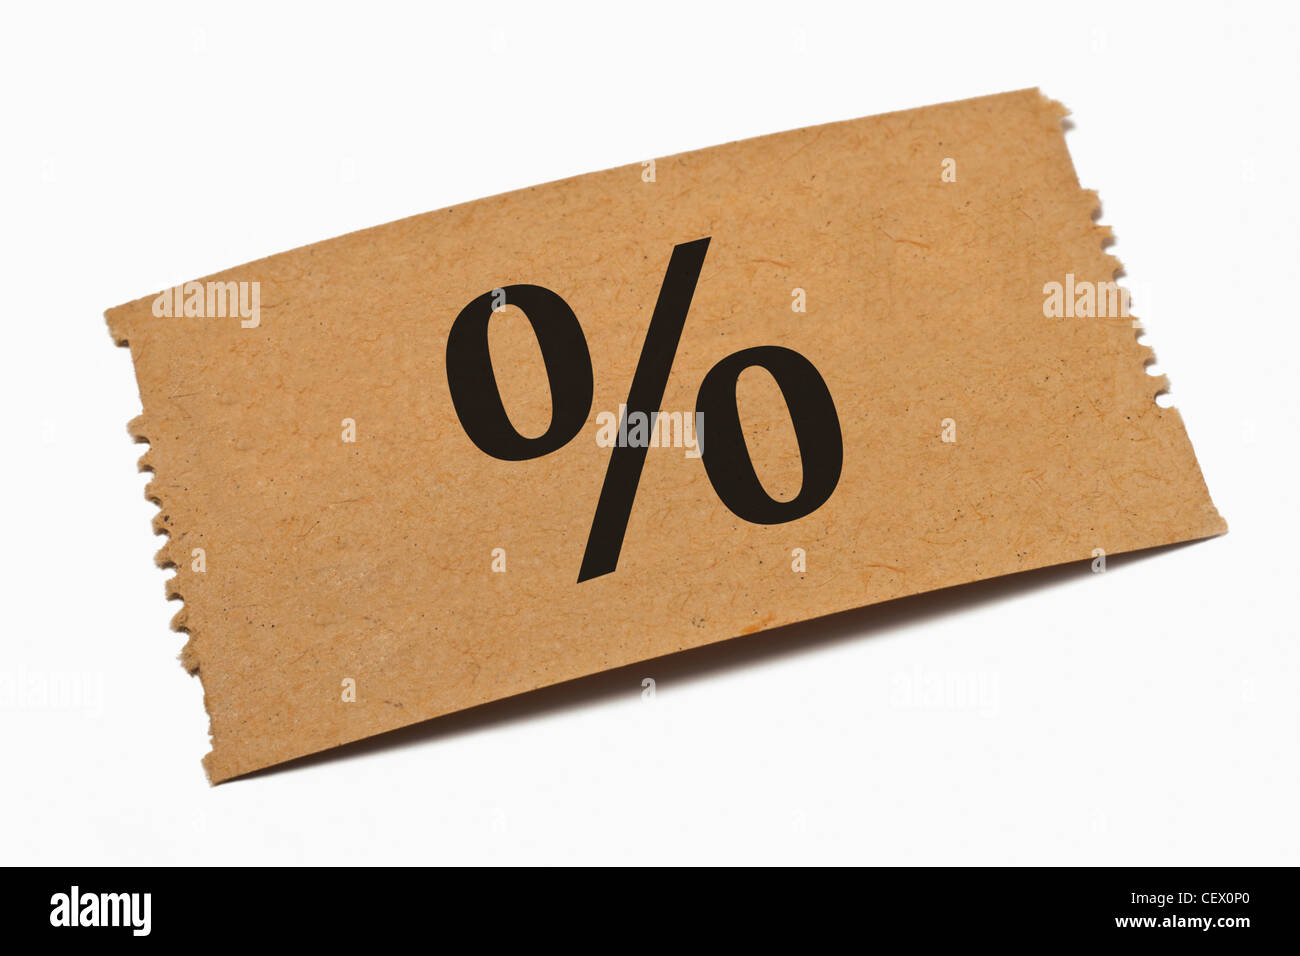 Detailansicht einer Karte aus Papier Mit einem Prozent simbolo | Dettaglio foto di una scheda di carta con un segno di percentuale Foto Stock